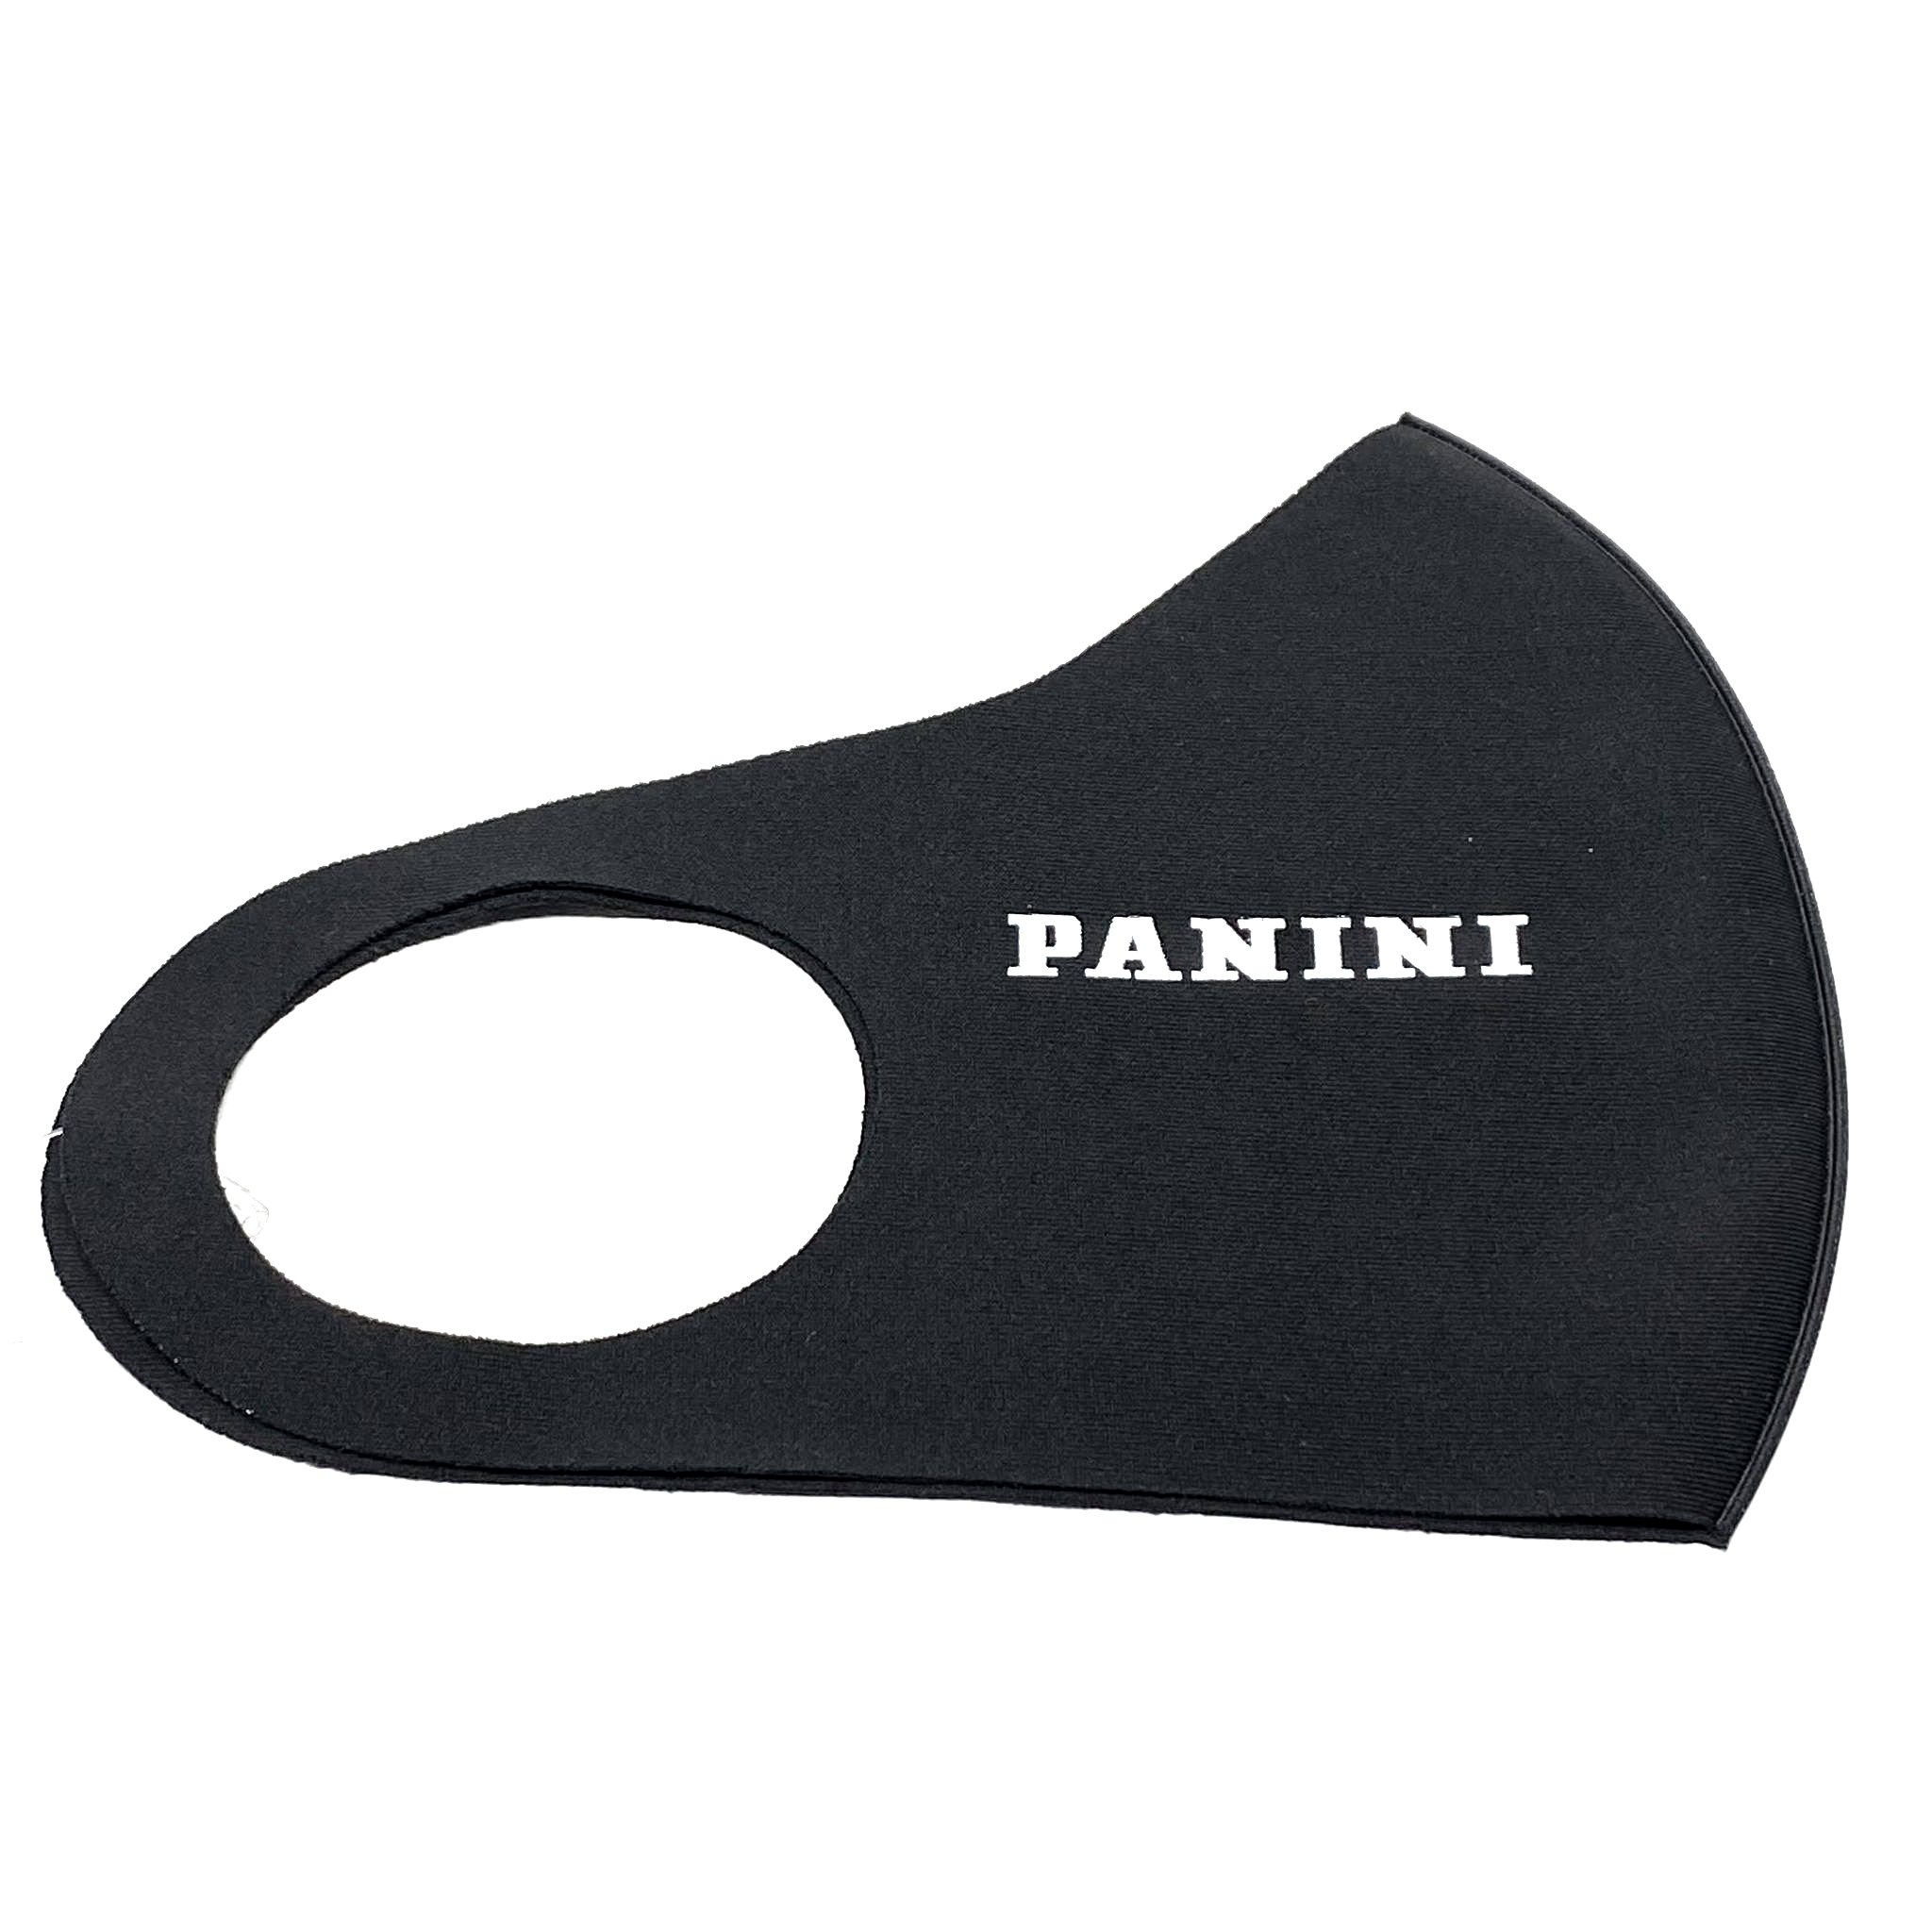 Panini Face Mask